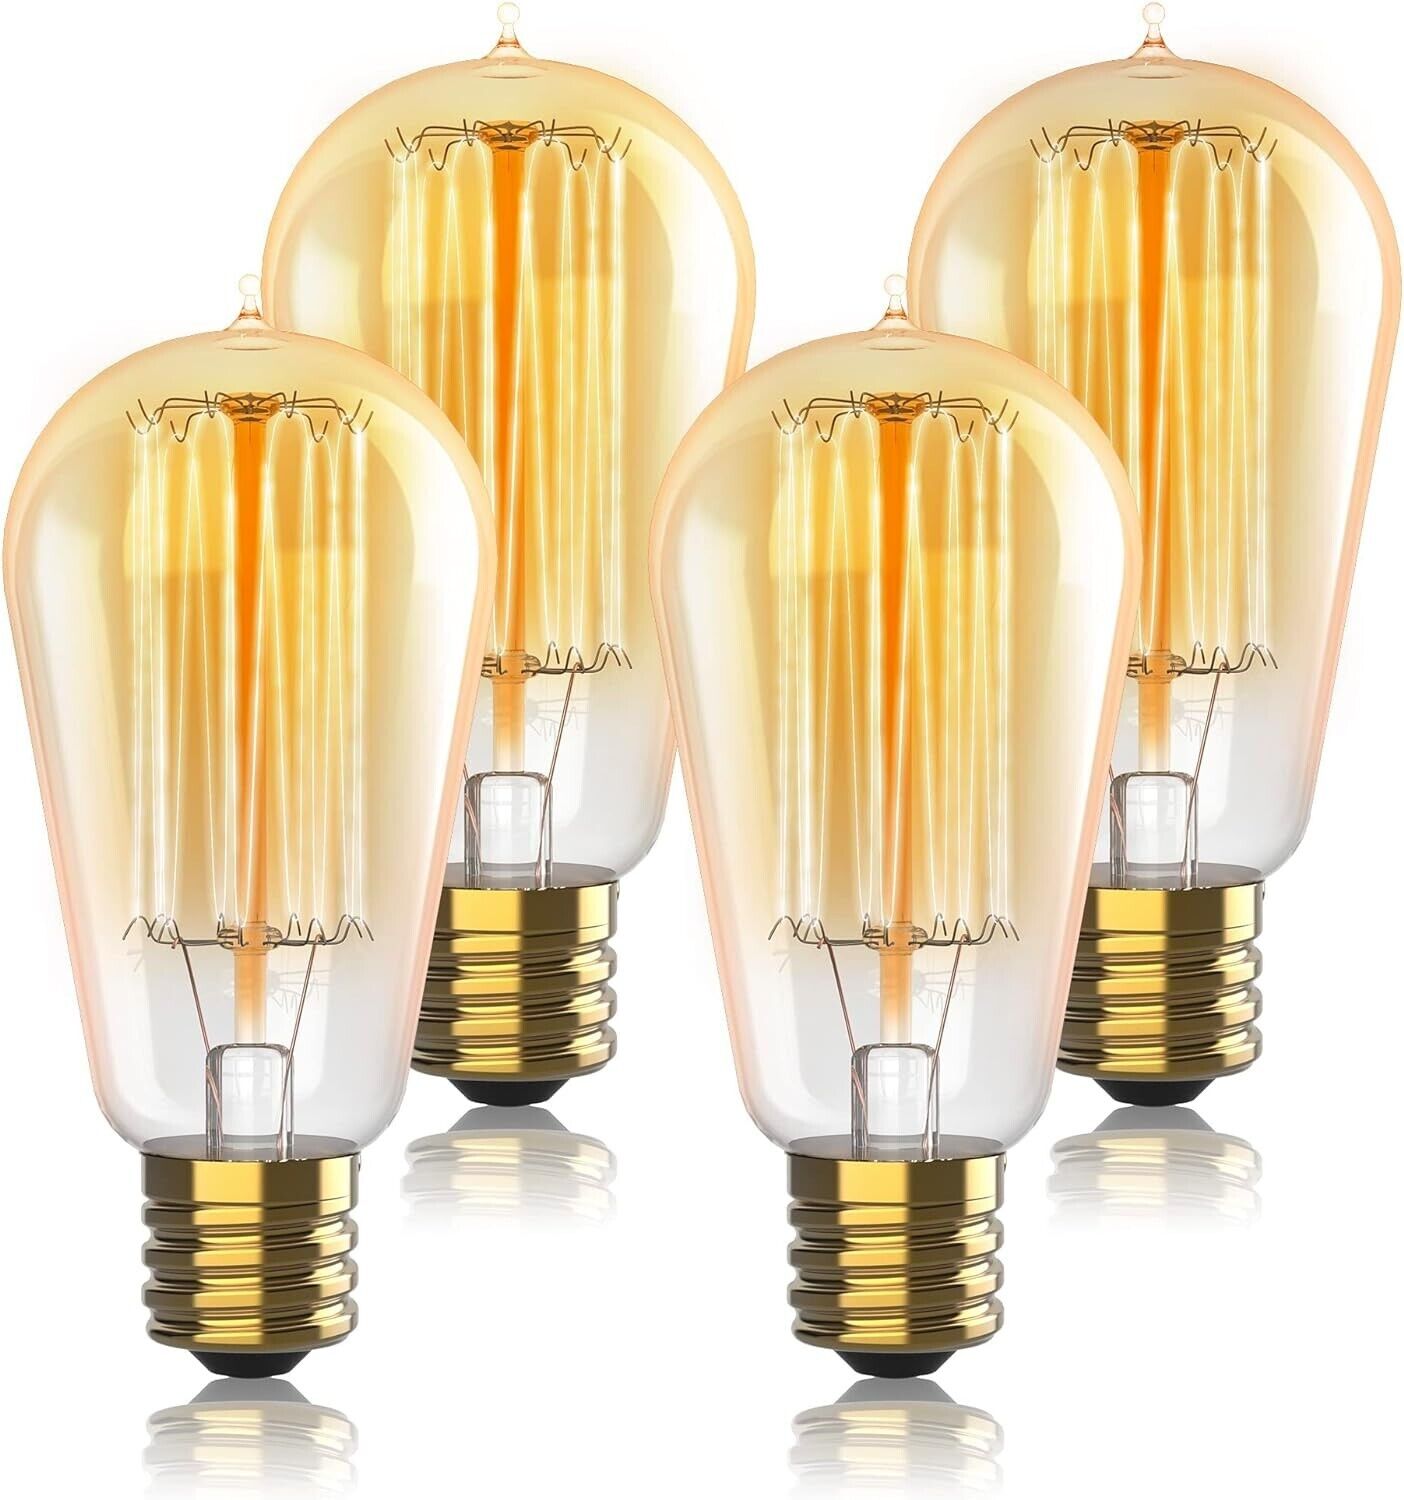 Hudson Bulb Co. Warm White Vintage Dimmable Light Edison Bulbs Pack Of 4 NEW